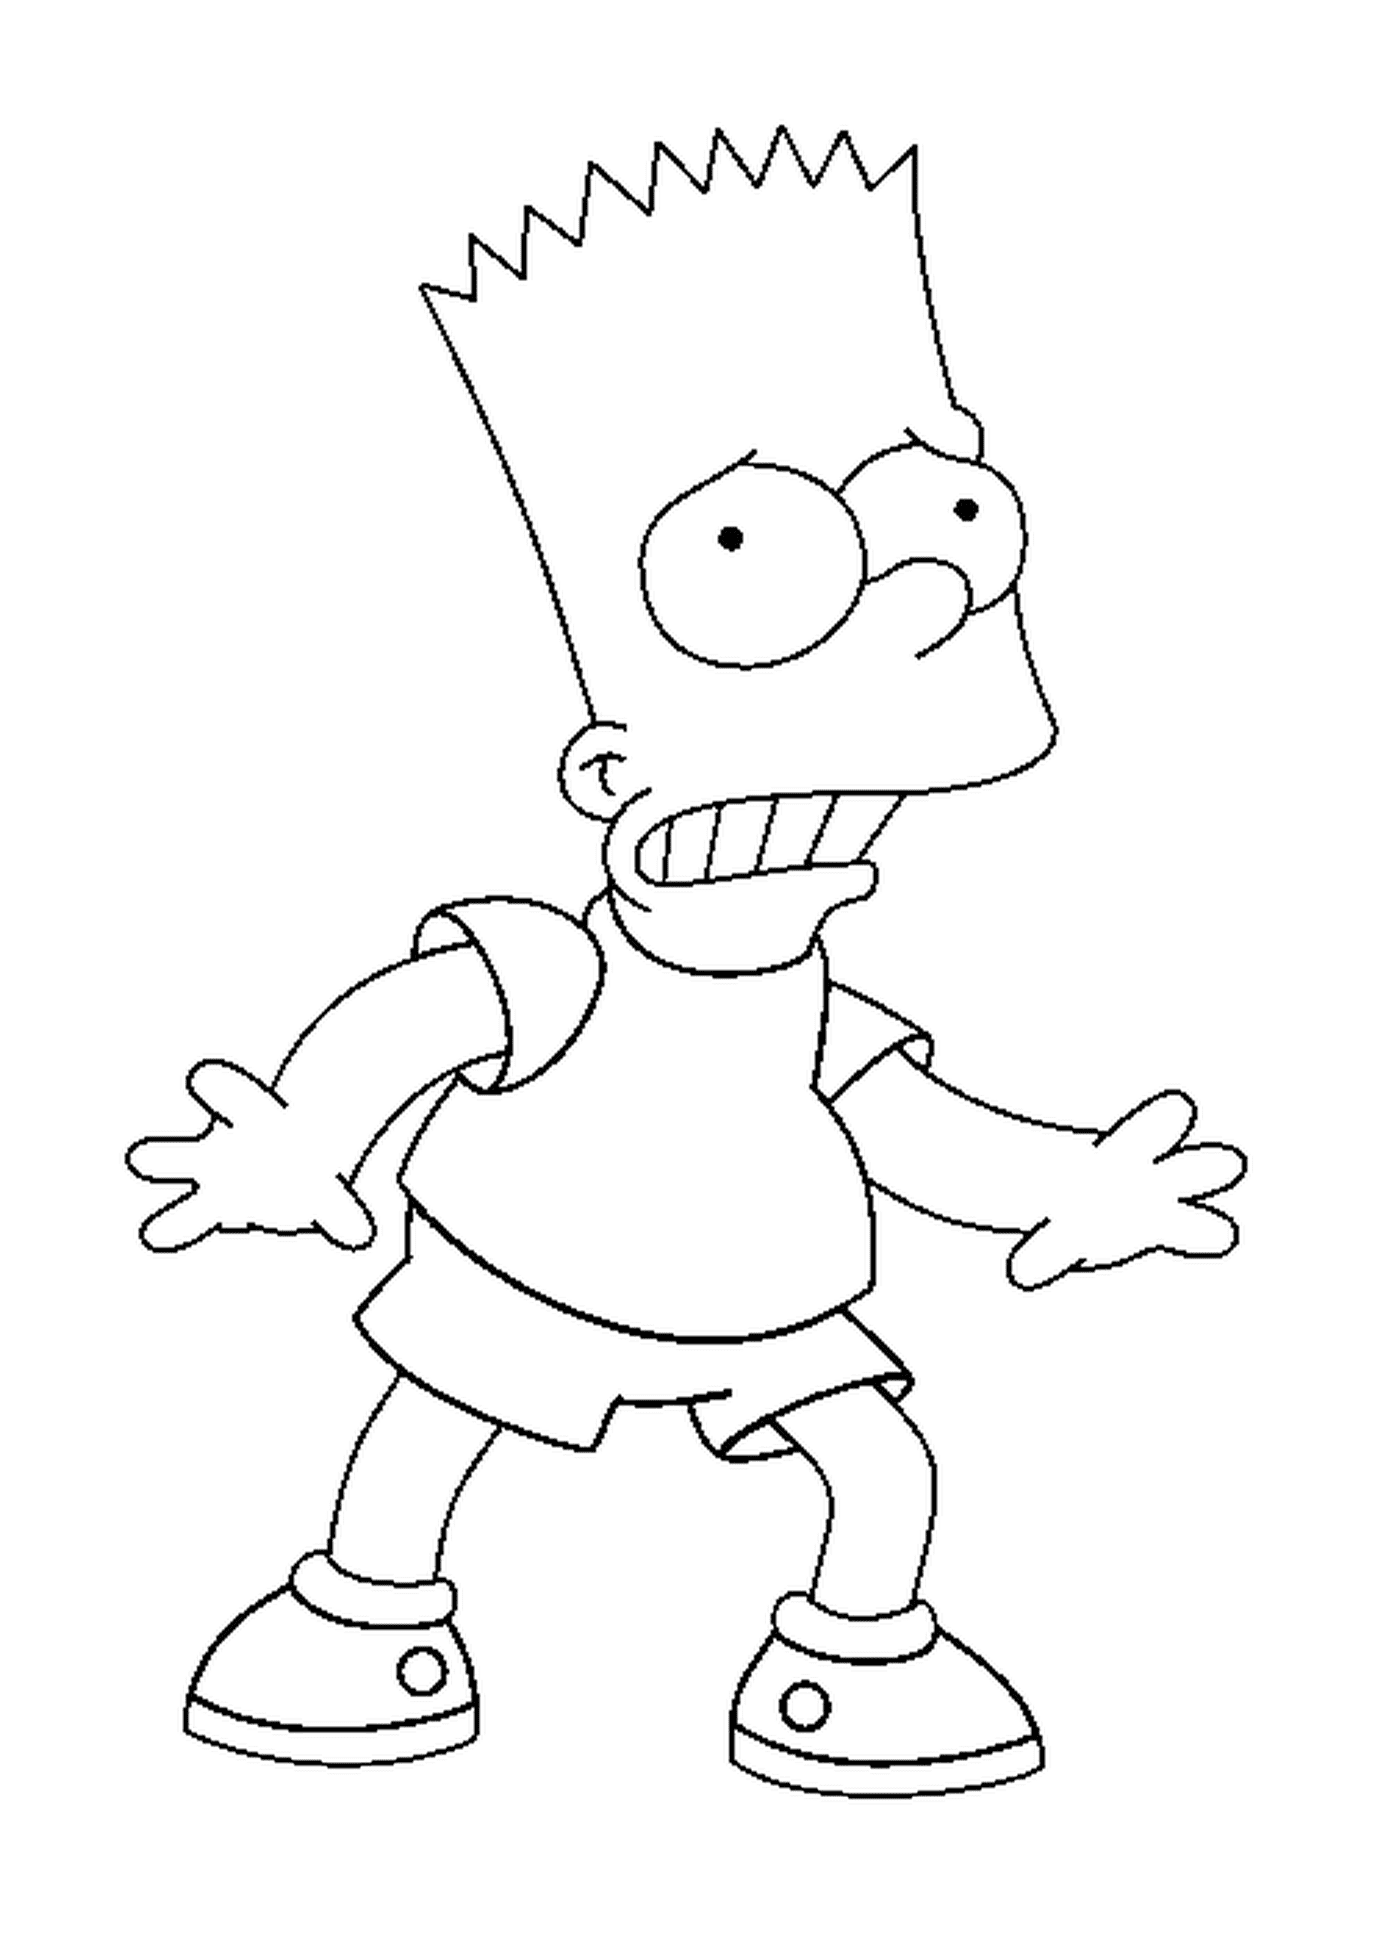   Bart a une expression effrayée 